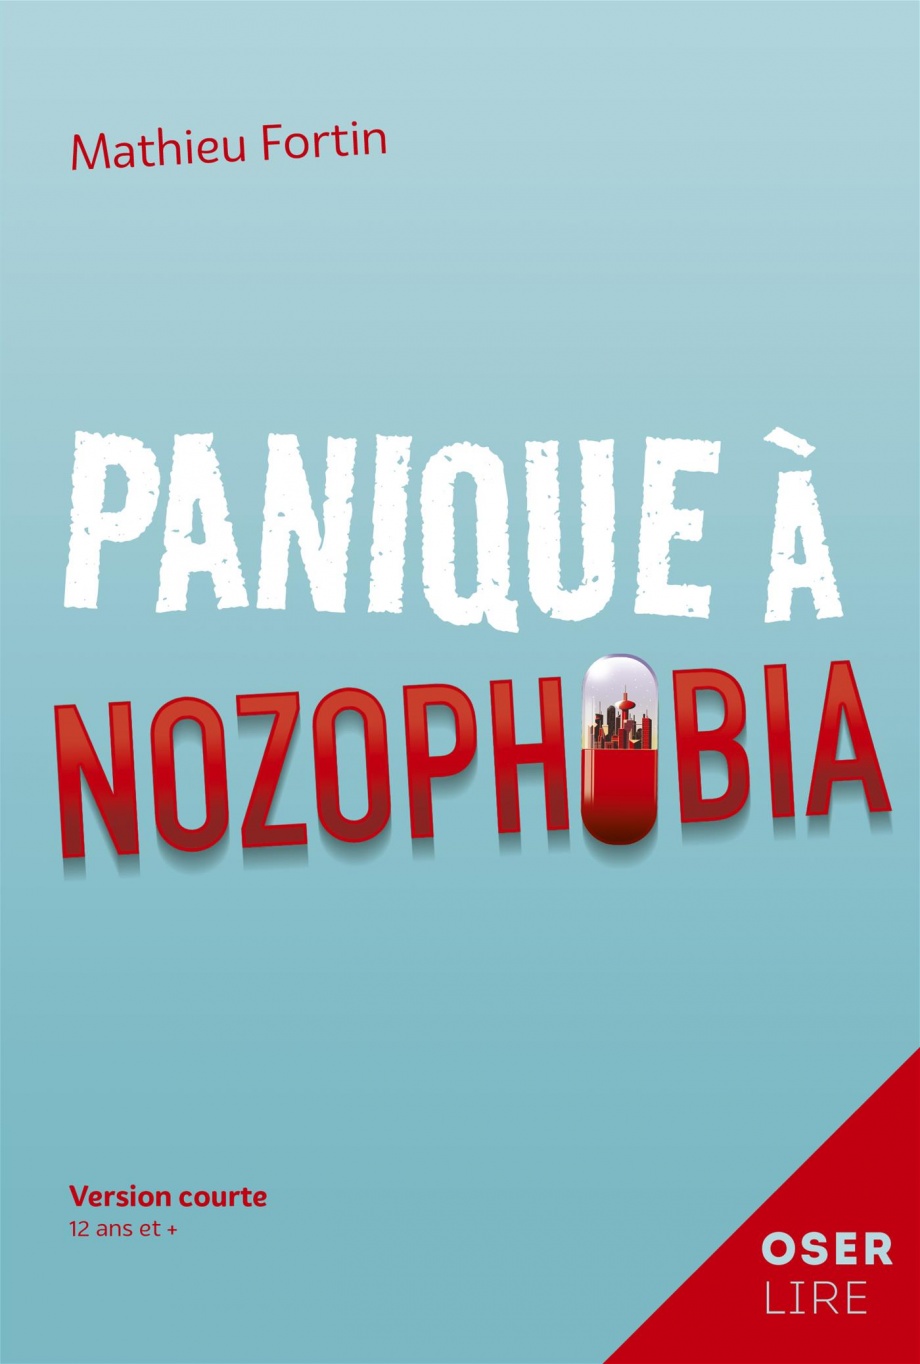 Book cover of PANIQUE NOZOPHOBIA